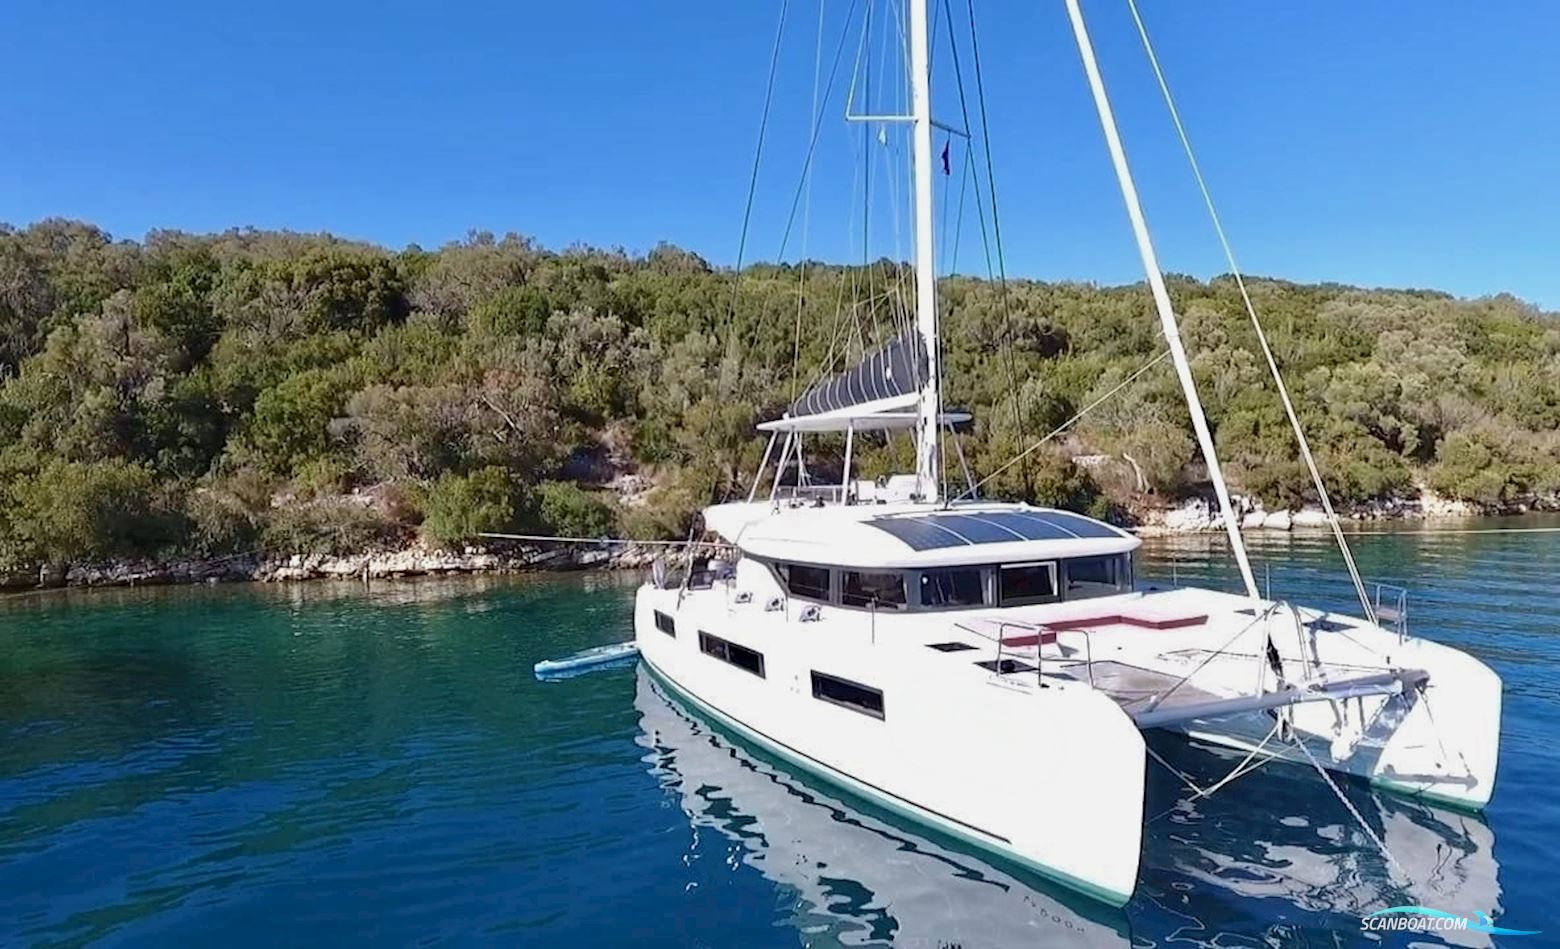 Lagoon LG 50 Flerskrovsbåt 2019, med Yanmar 4JH80 motor, Grekland